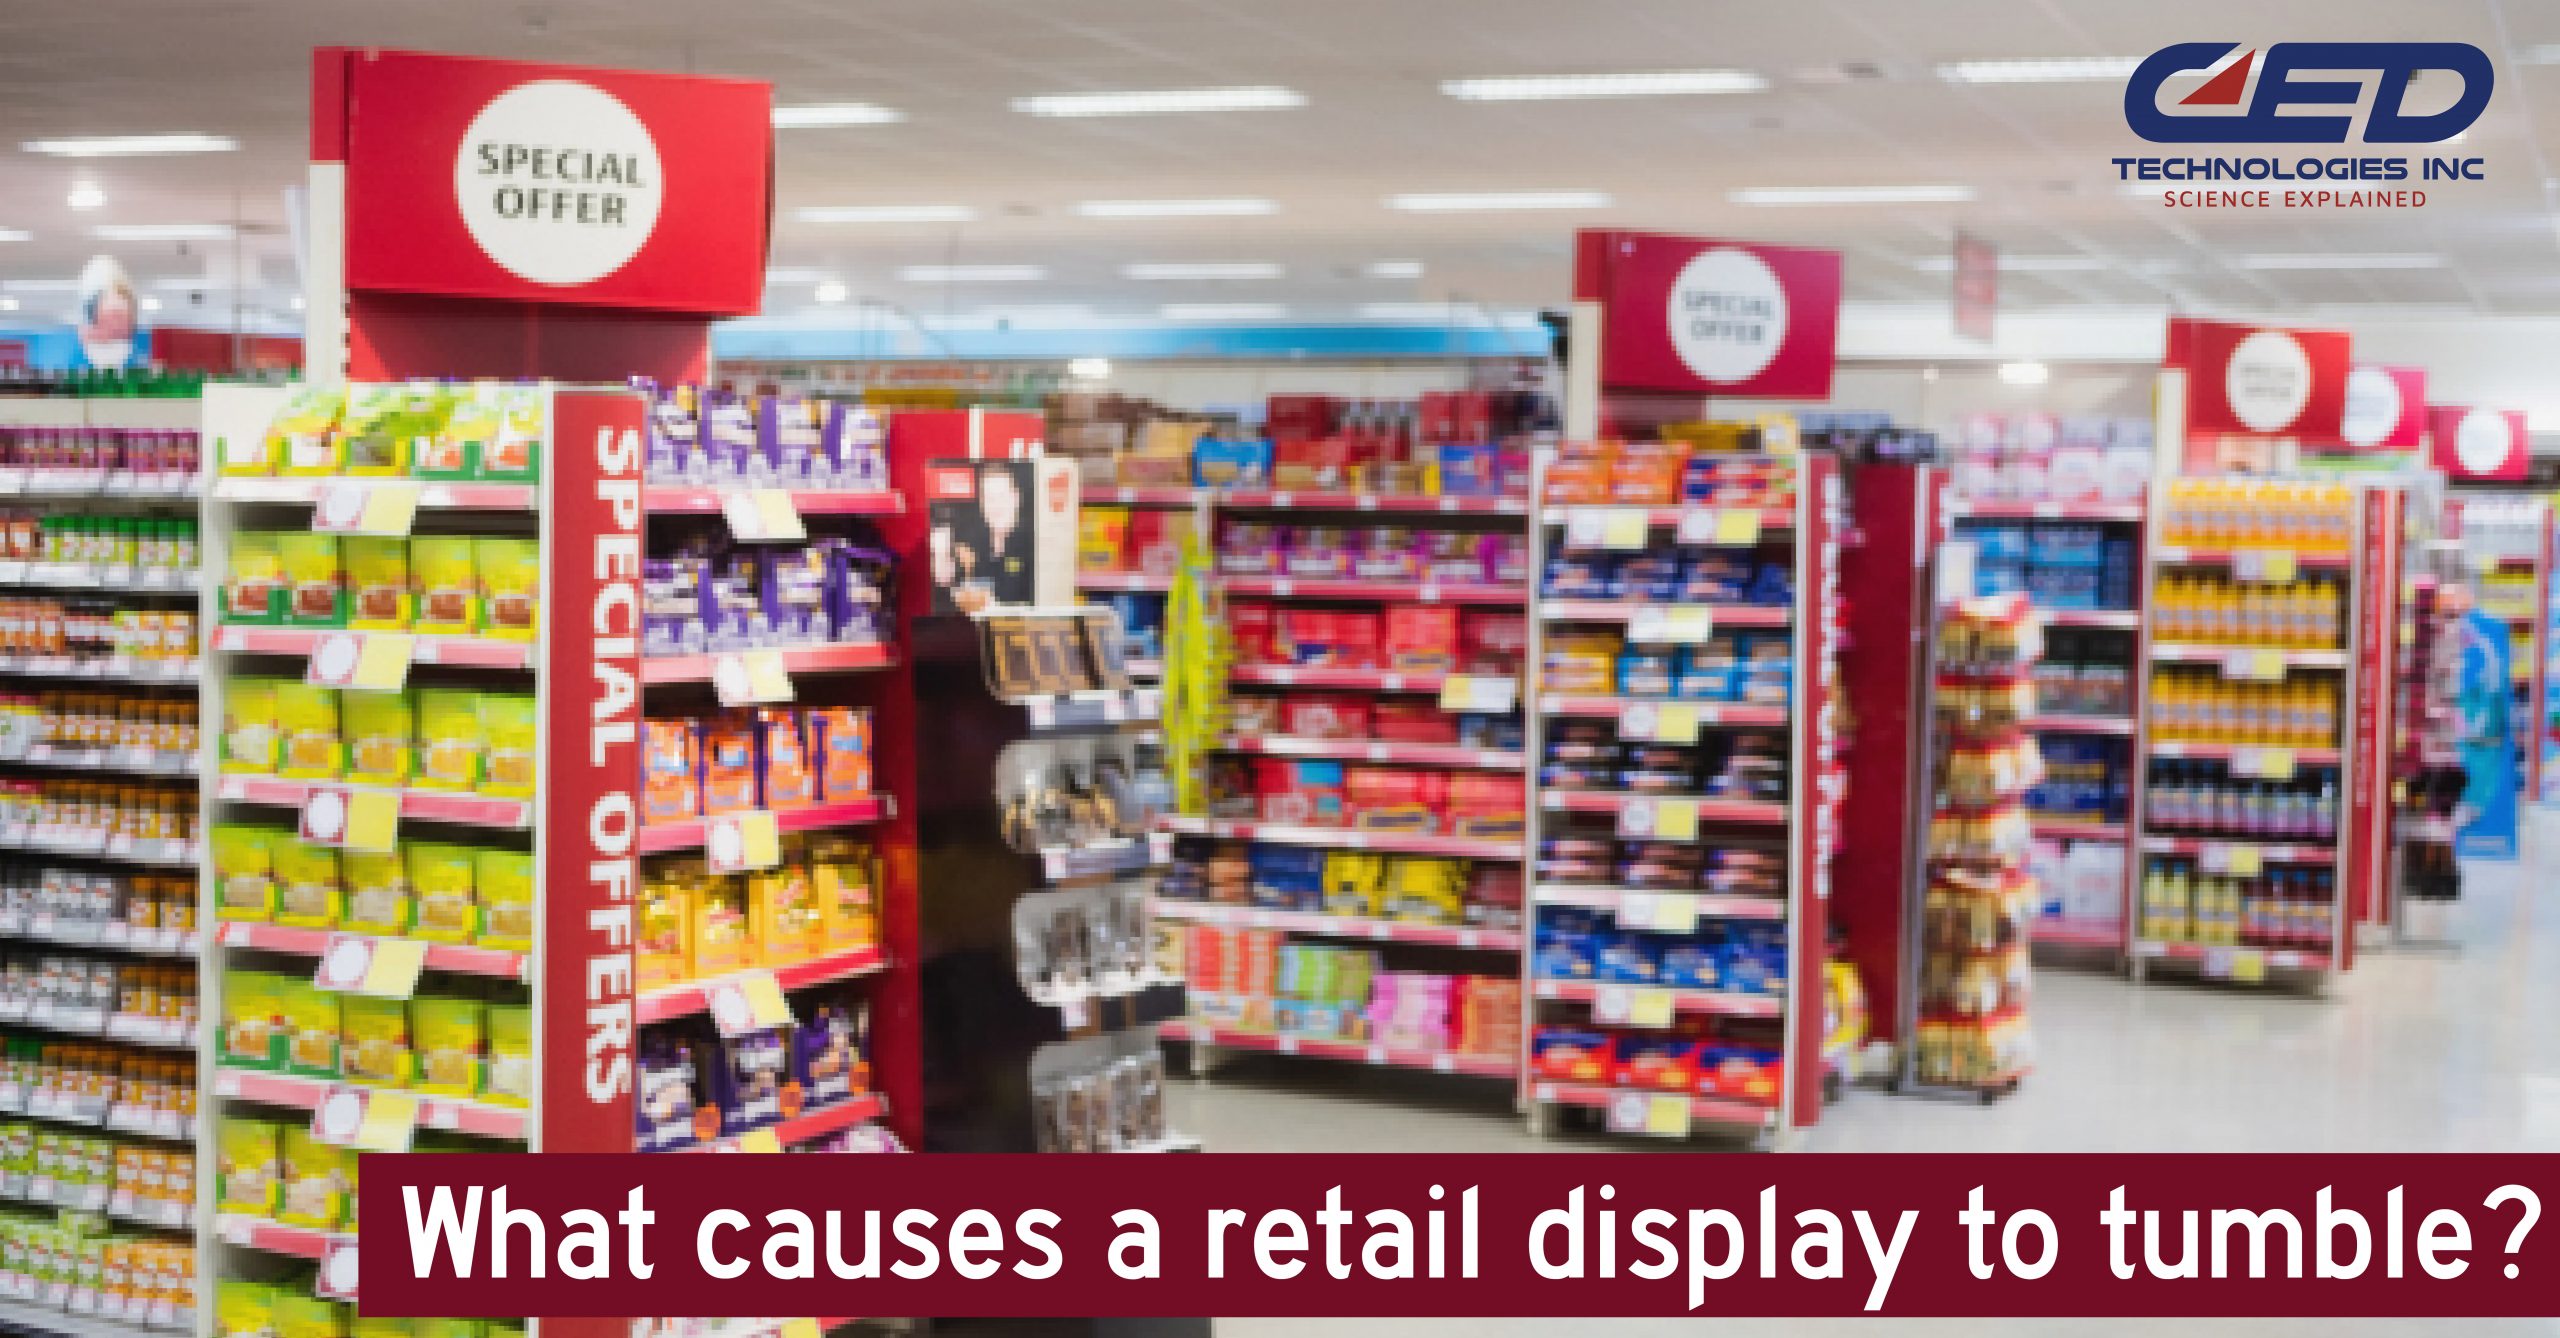 CED Investigates: Retail Display Incidents